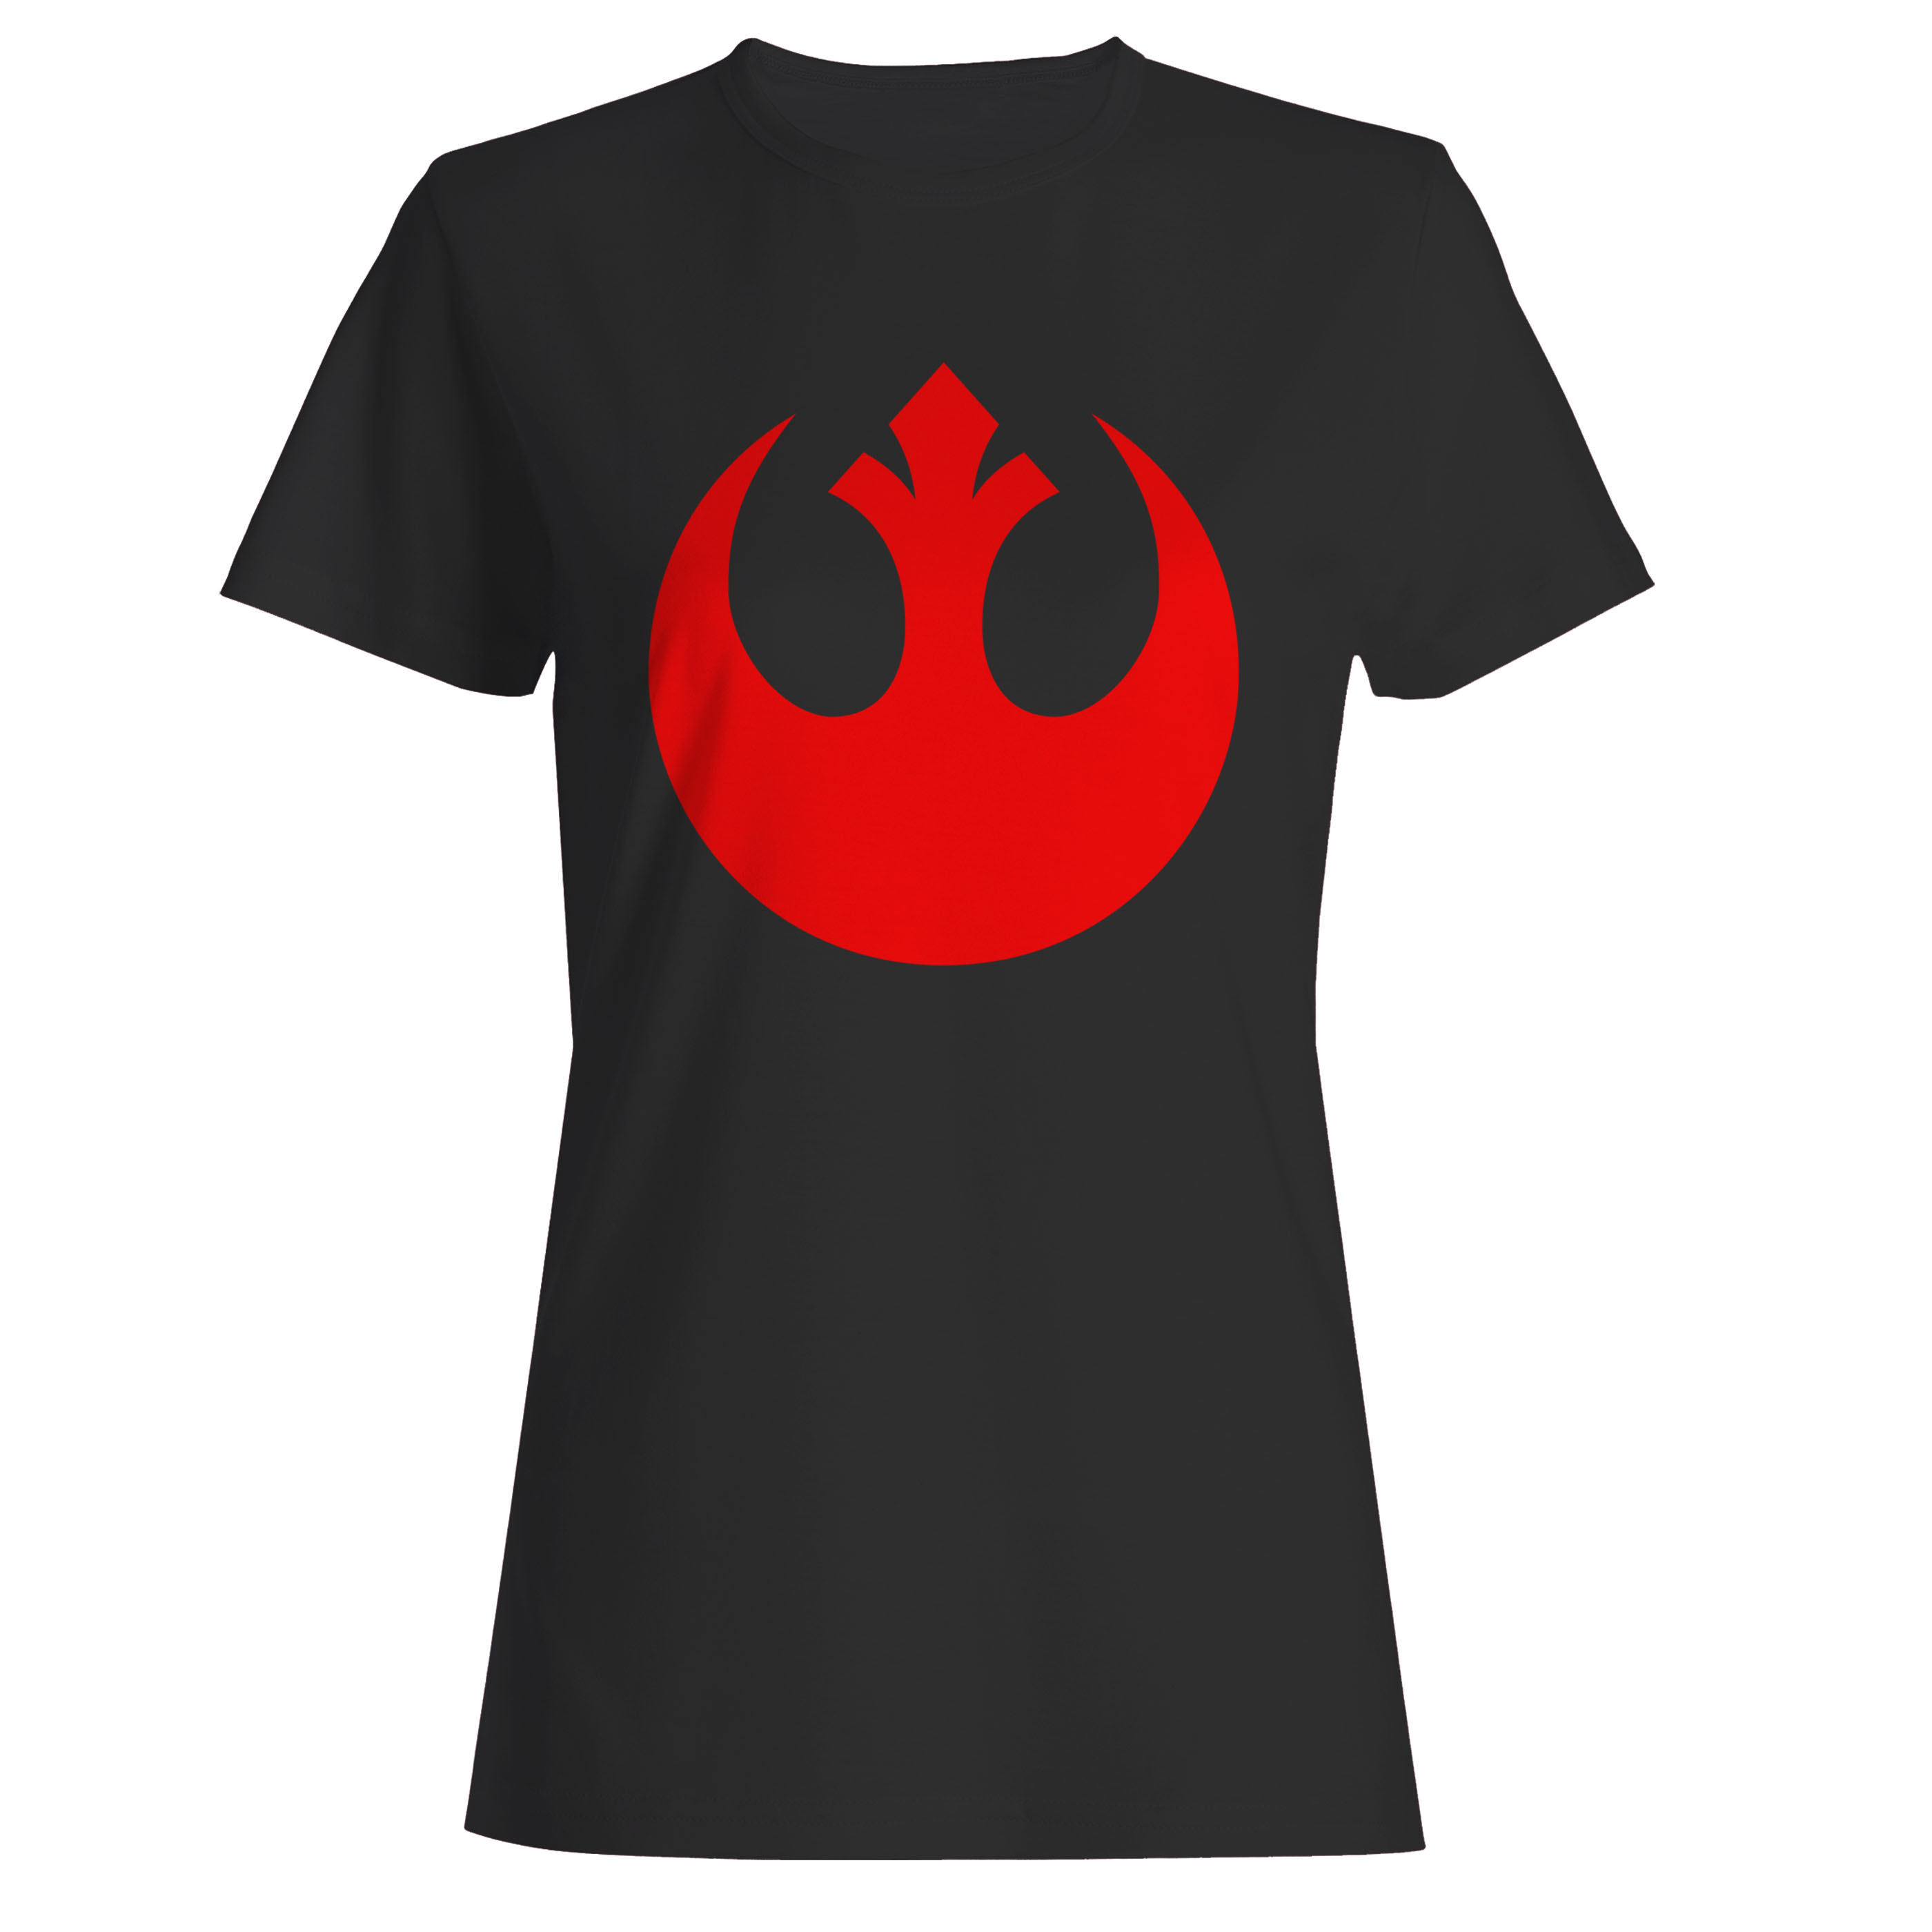 Star Wars Rebel Alliance Logo Women T Shirt.